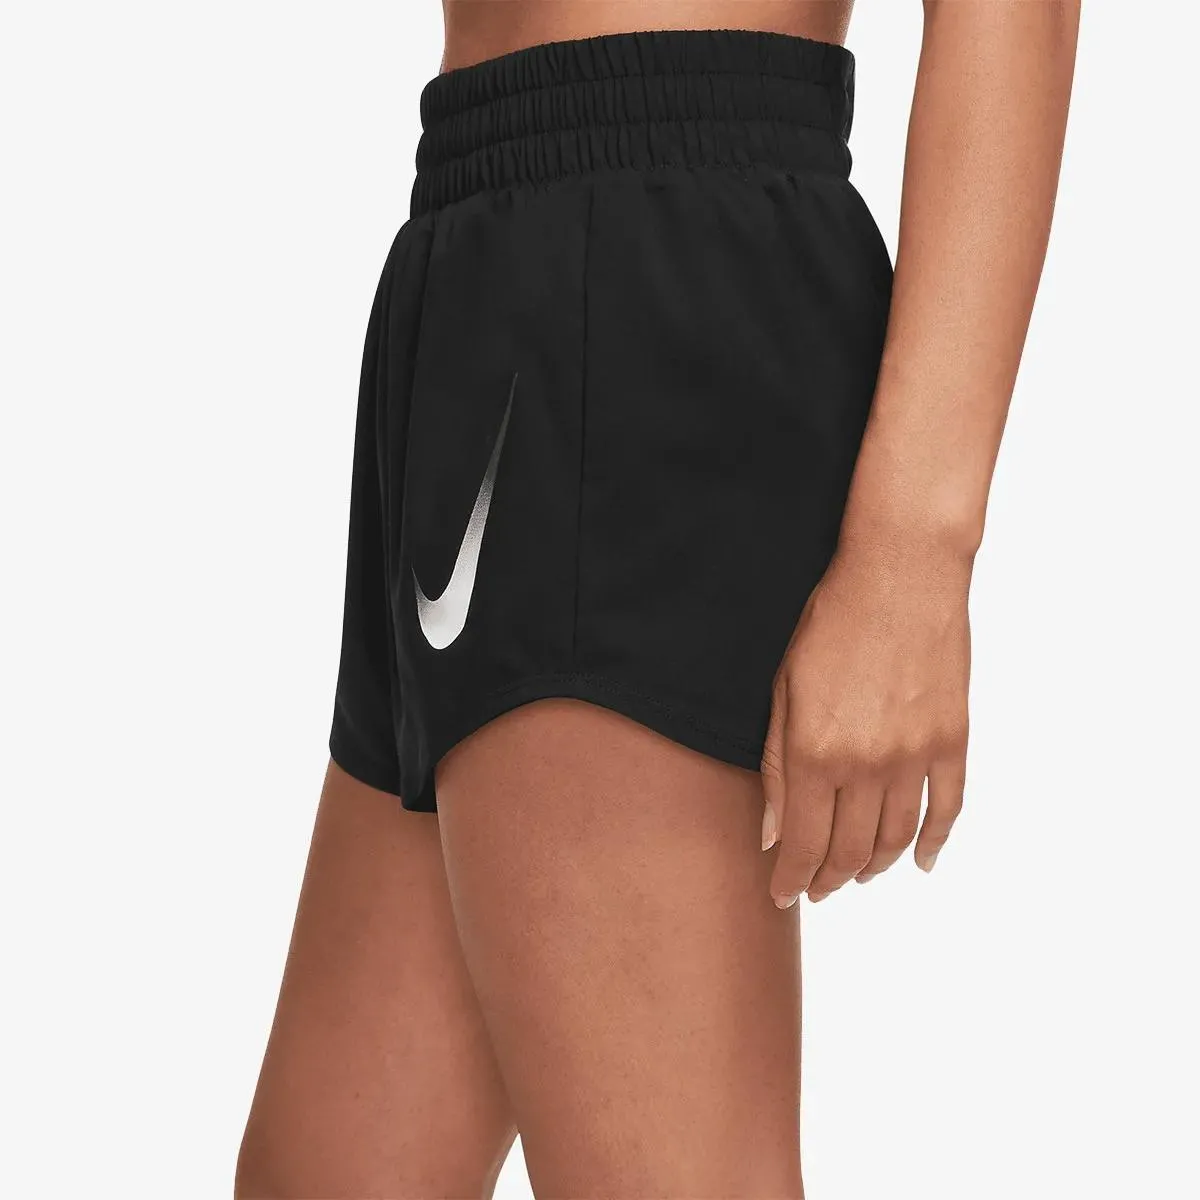 Nike Kratke hlače Swoosh 